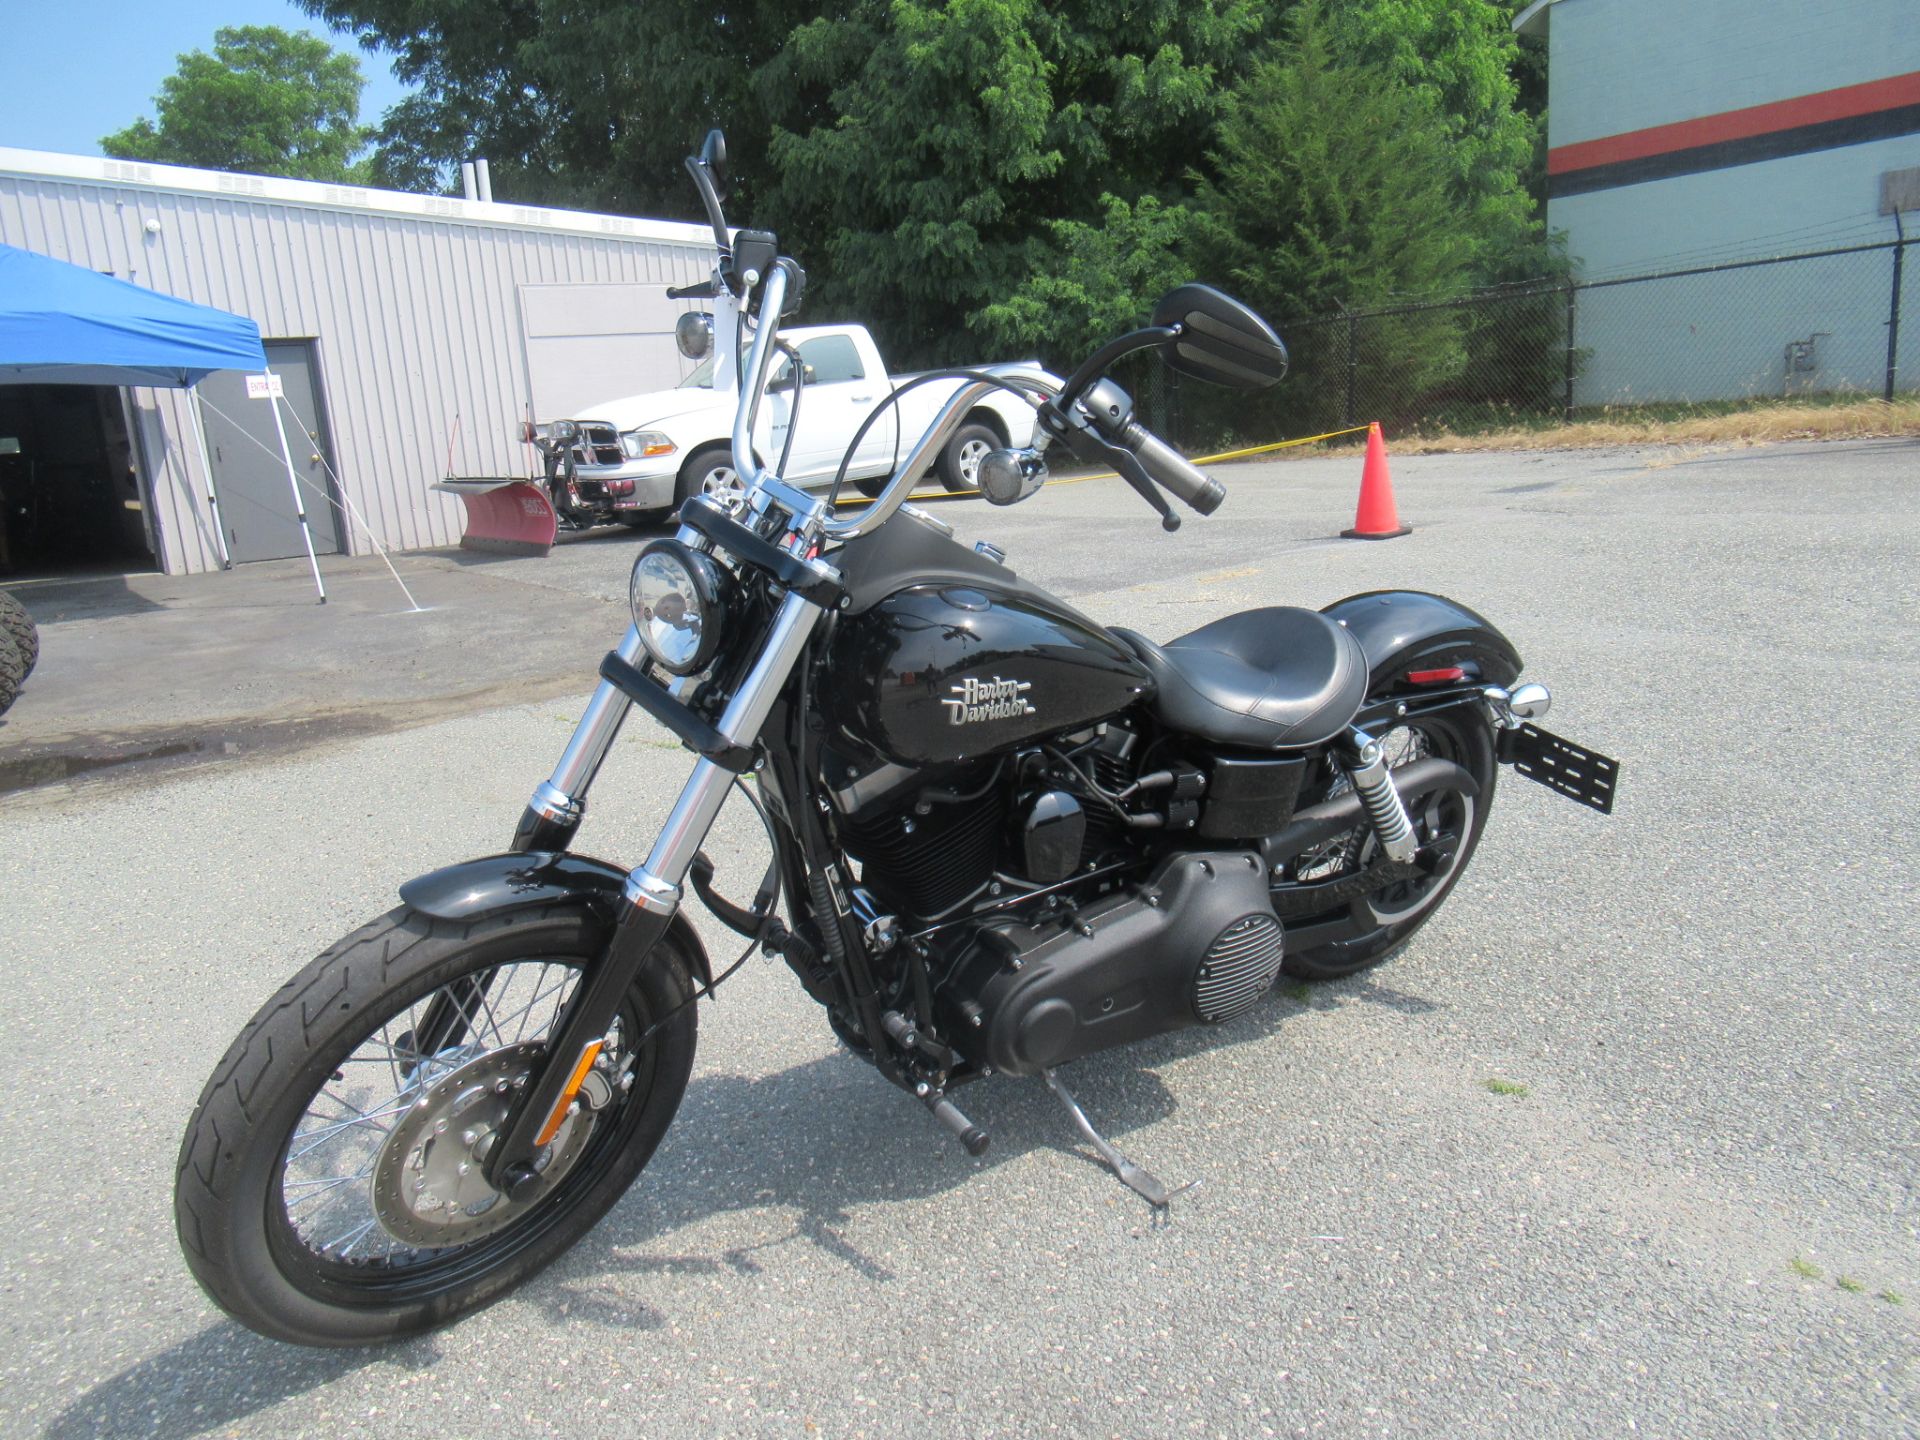 2017 Harley-Davidson Street Bob® in Springfield, Massachusetts - Photo 6